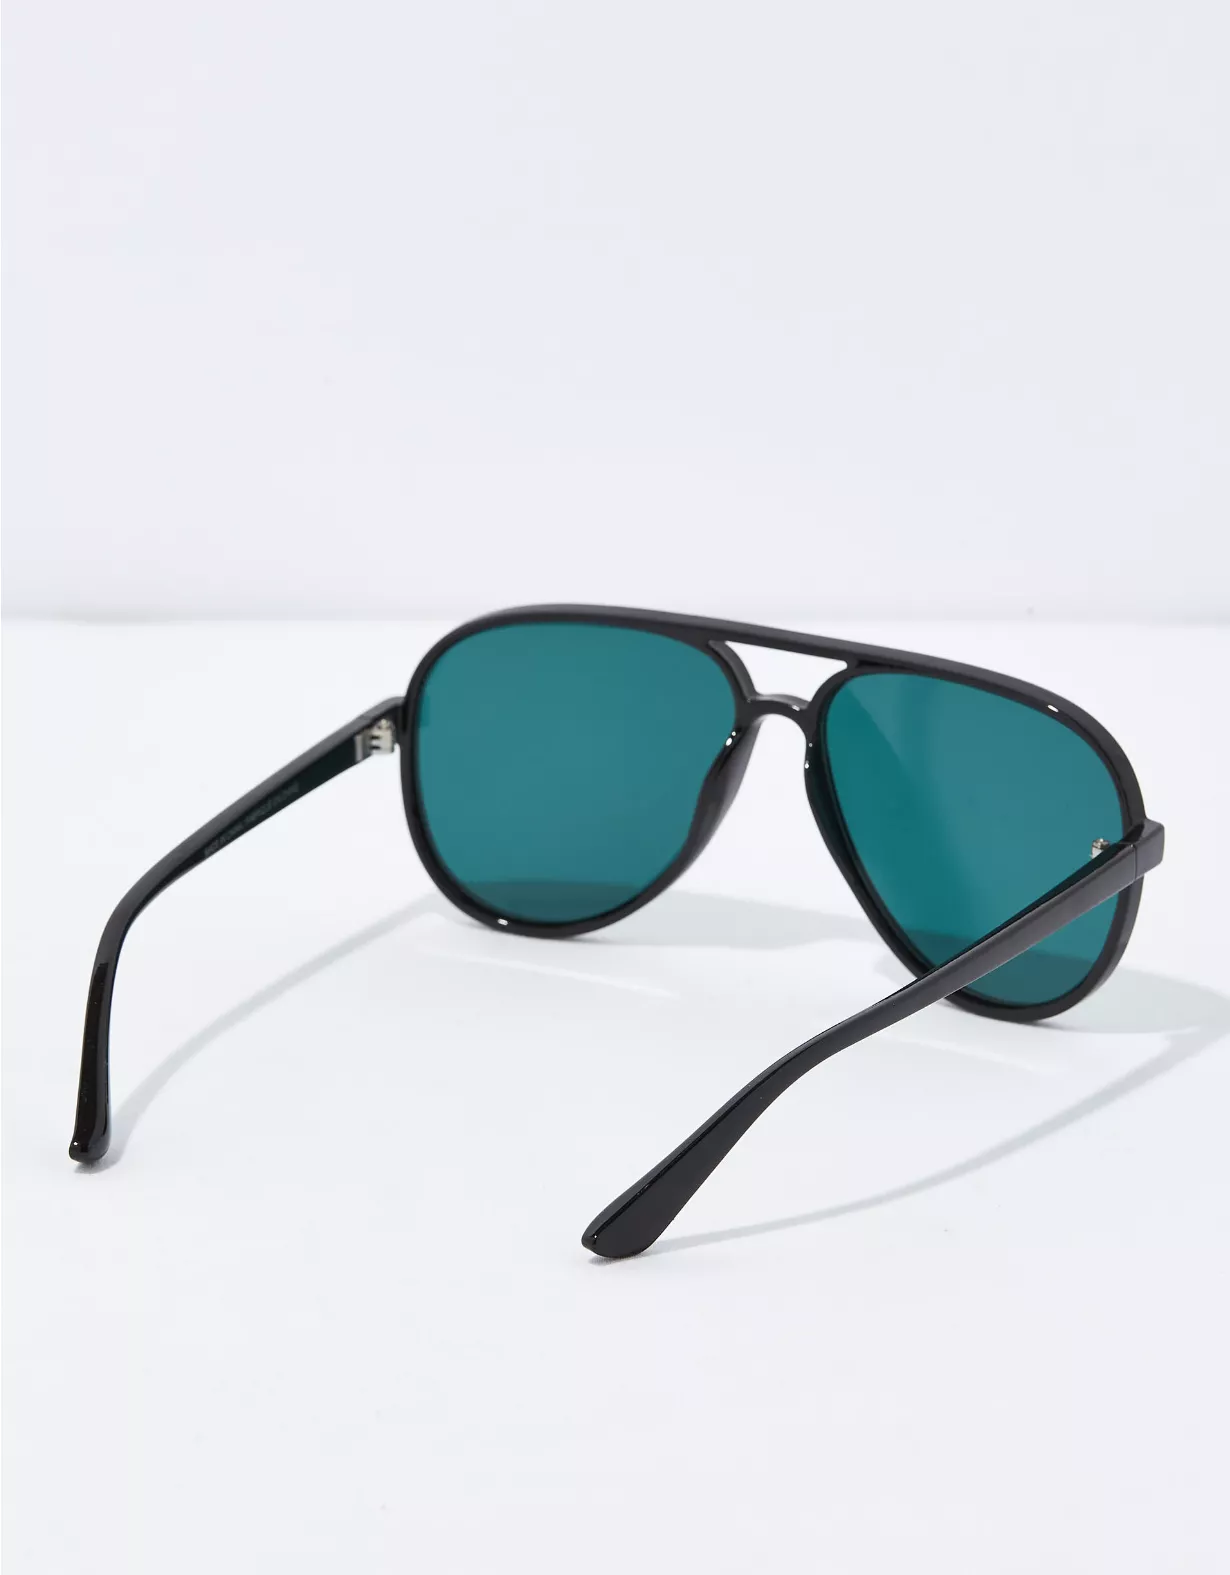 AEO Plastic Frame Aviator Sunglasses